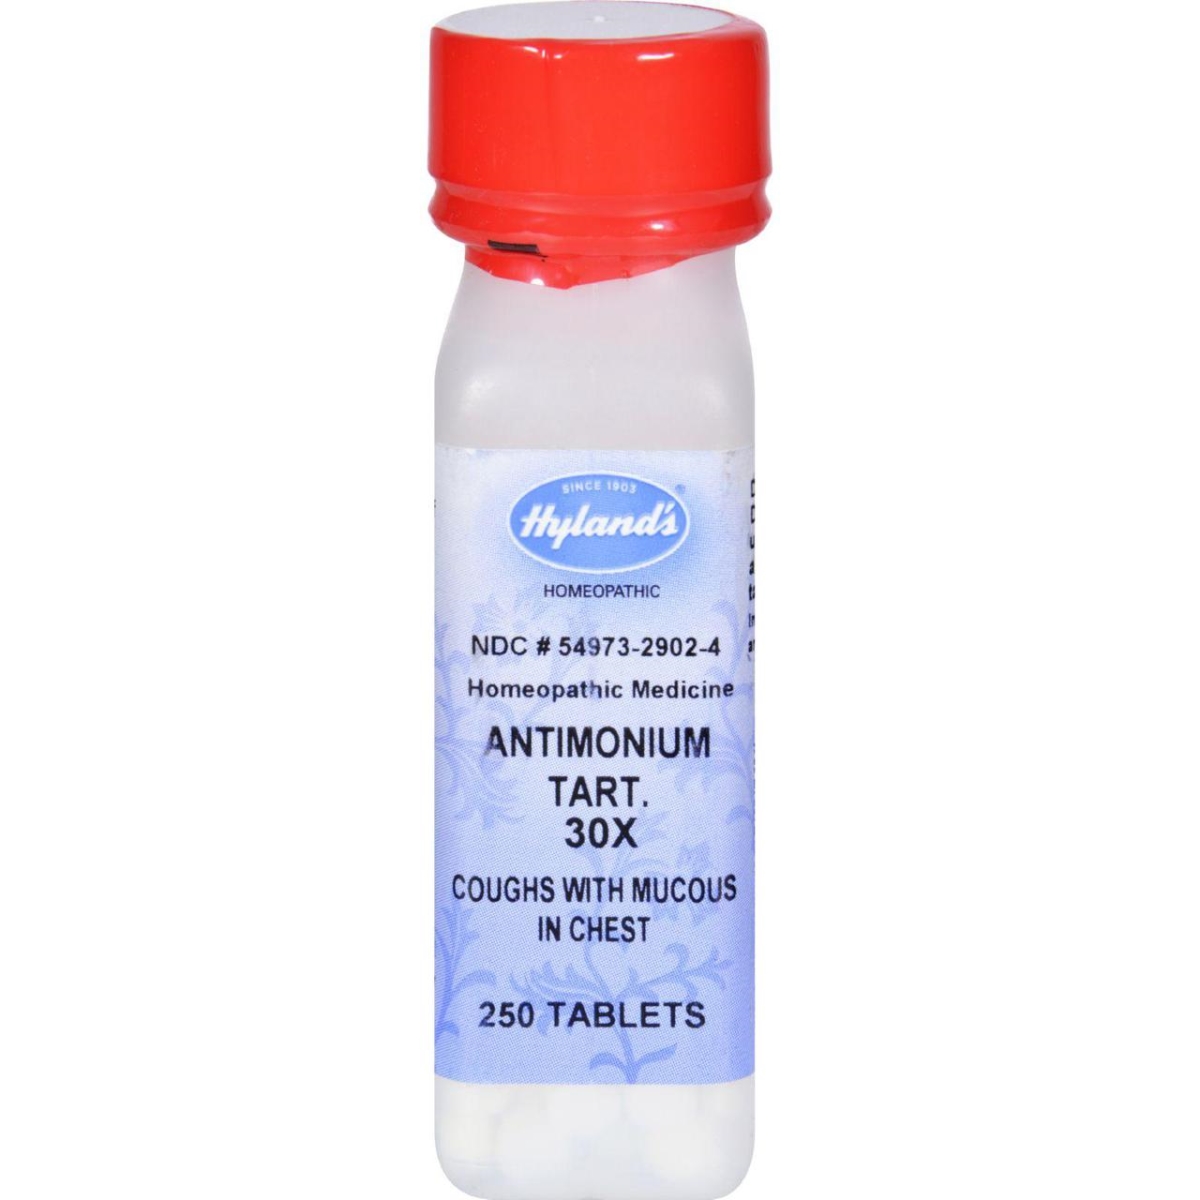 Hg0778886 Antimonium Tartaricum 30x - 250 Tablets